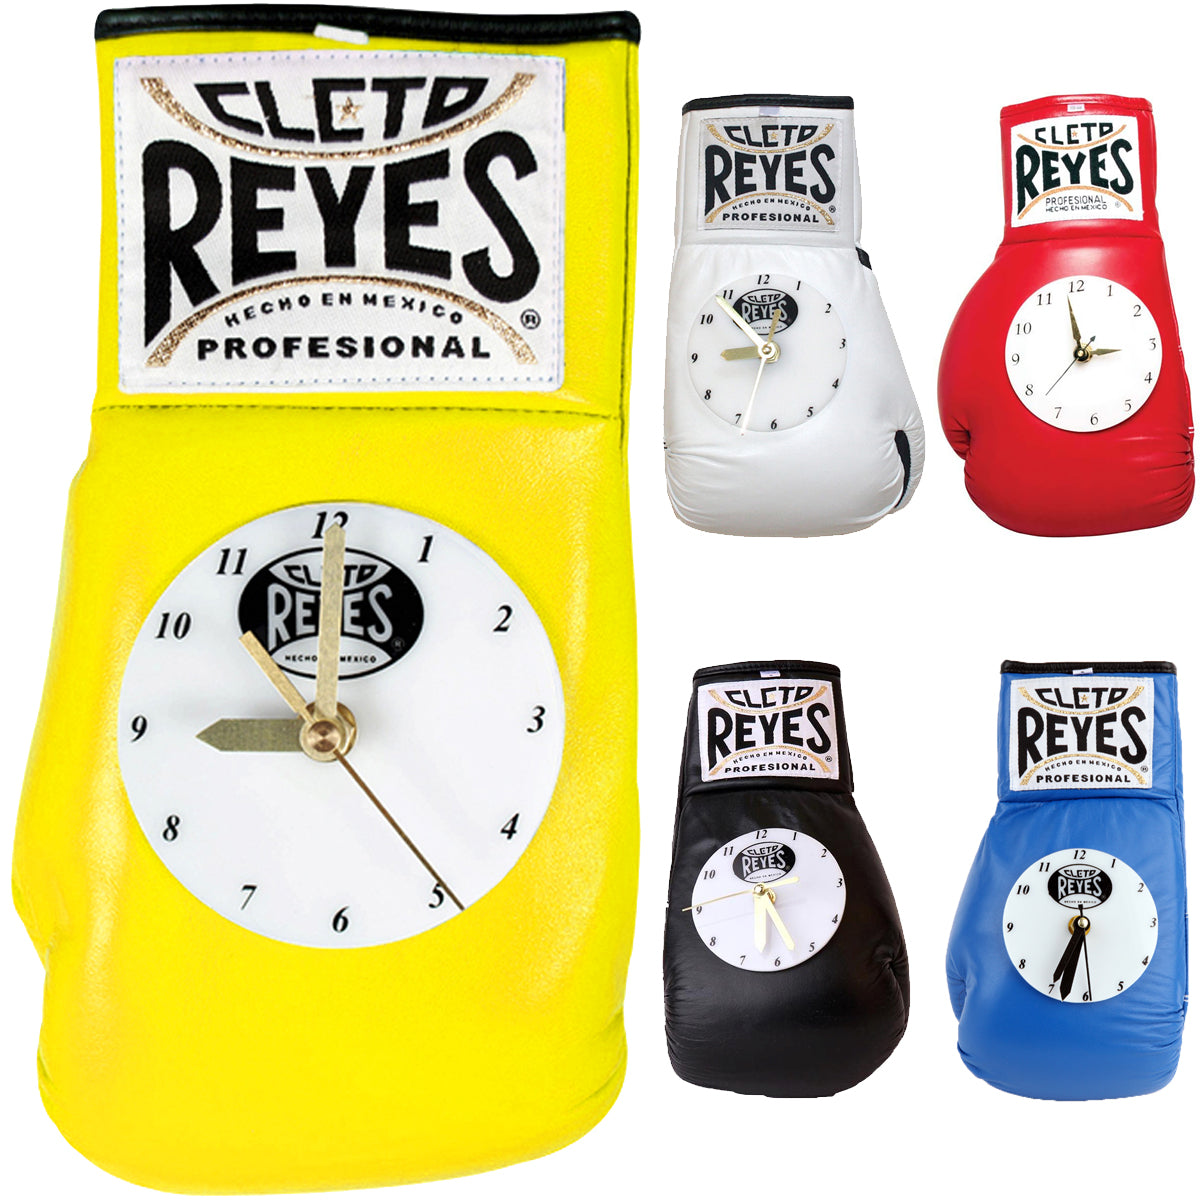 Cleto Reyes 10 oz Authentic Pro Fight Leather Clock Glove Cleto Reyes